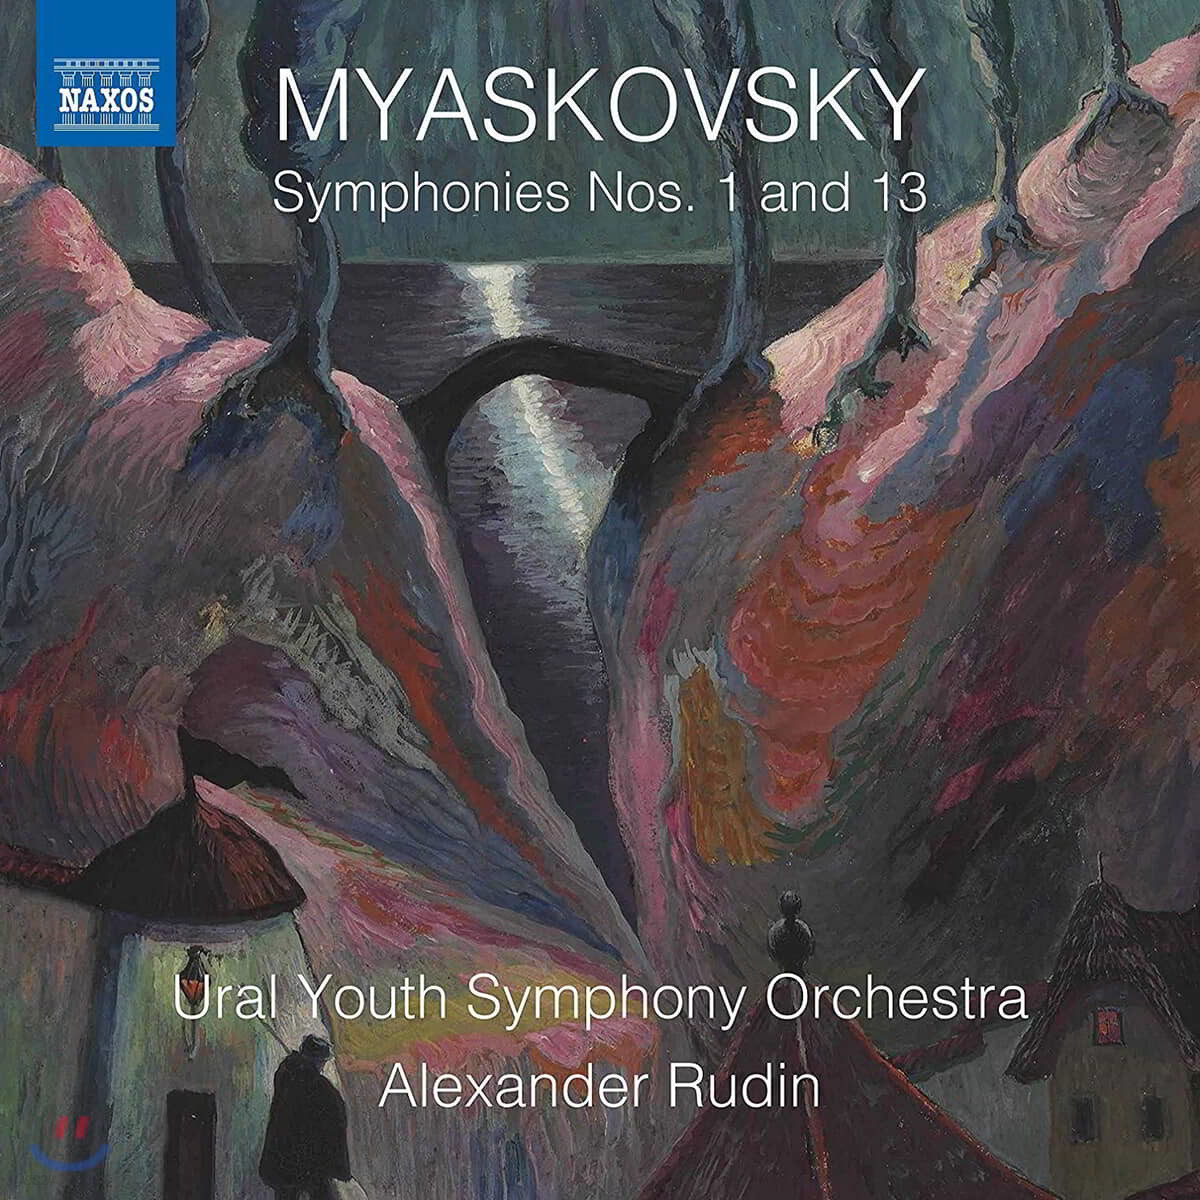 Alexander Rudin 니콜라이 미야코프스키: 교향곡 1, 13번 (Nicolai Myaskovsky: Symphonies Op. 3, 36)